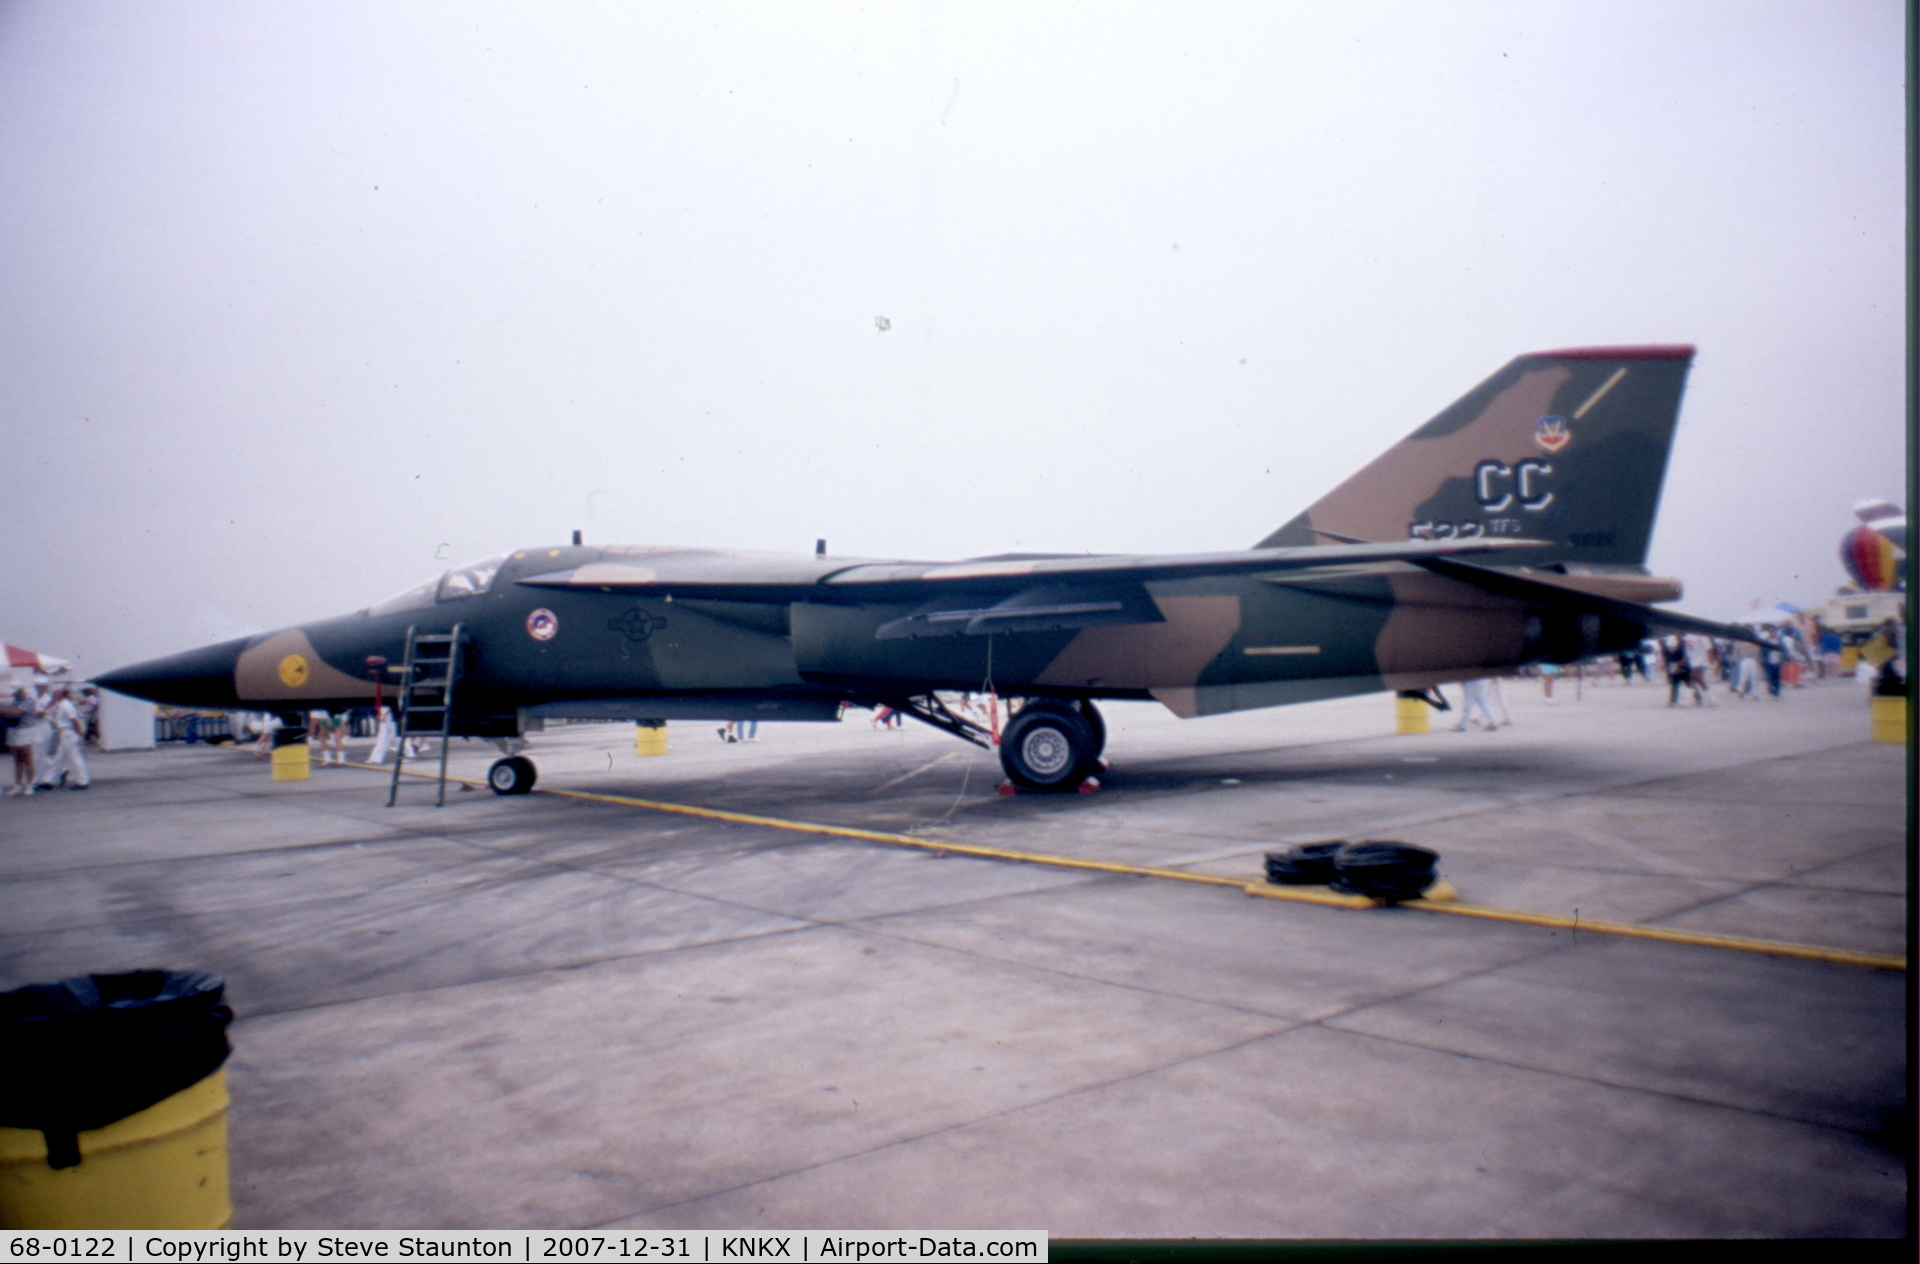 68-0122, 1968 General Dynamics F-111D Aardvark C/N A6-38, Taken at NAS Miramar Airshow in 1988 (scan of a slide)